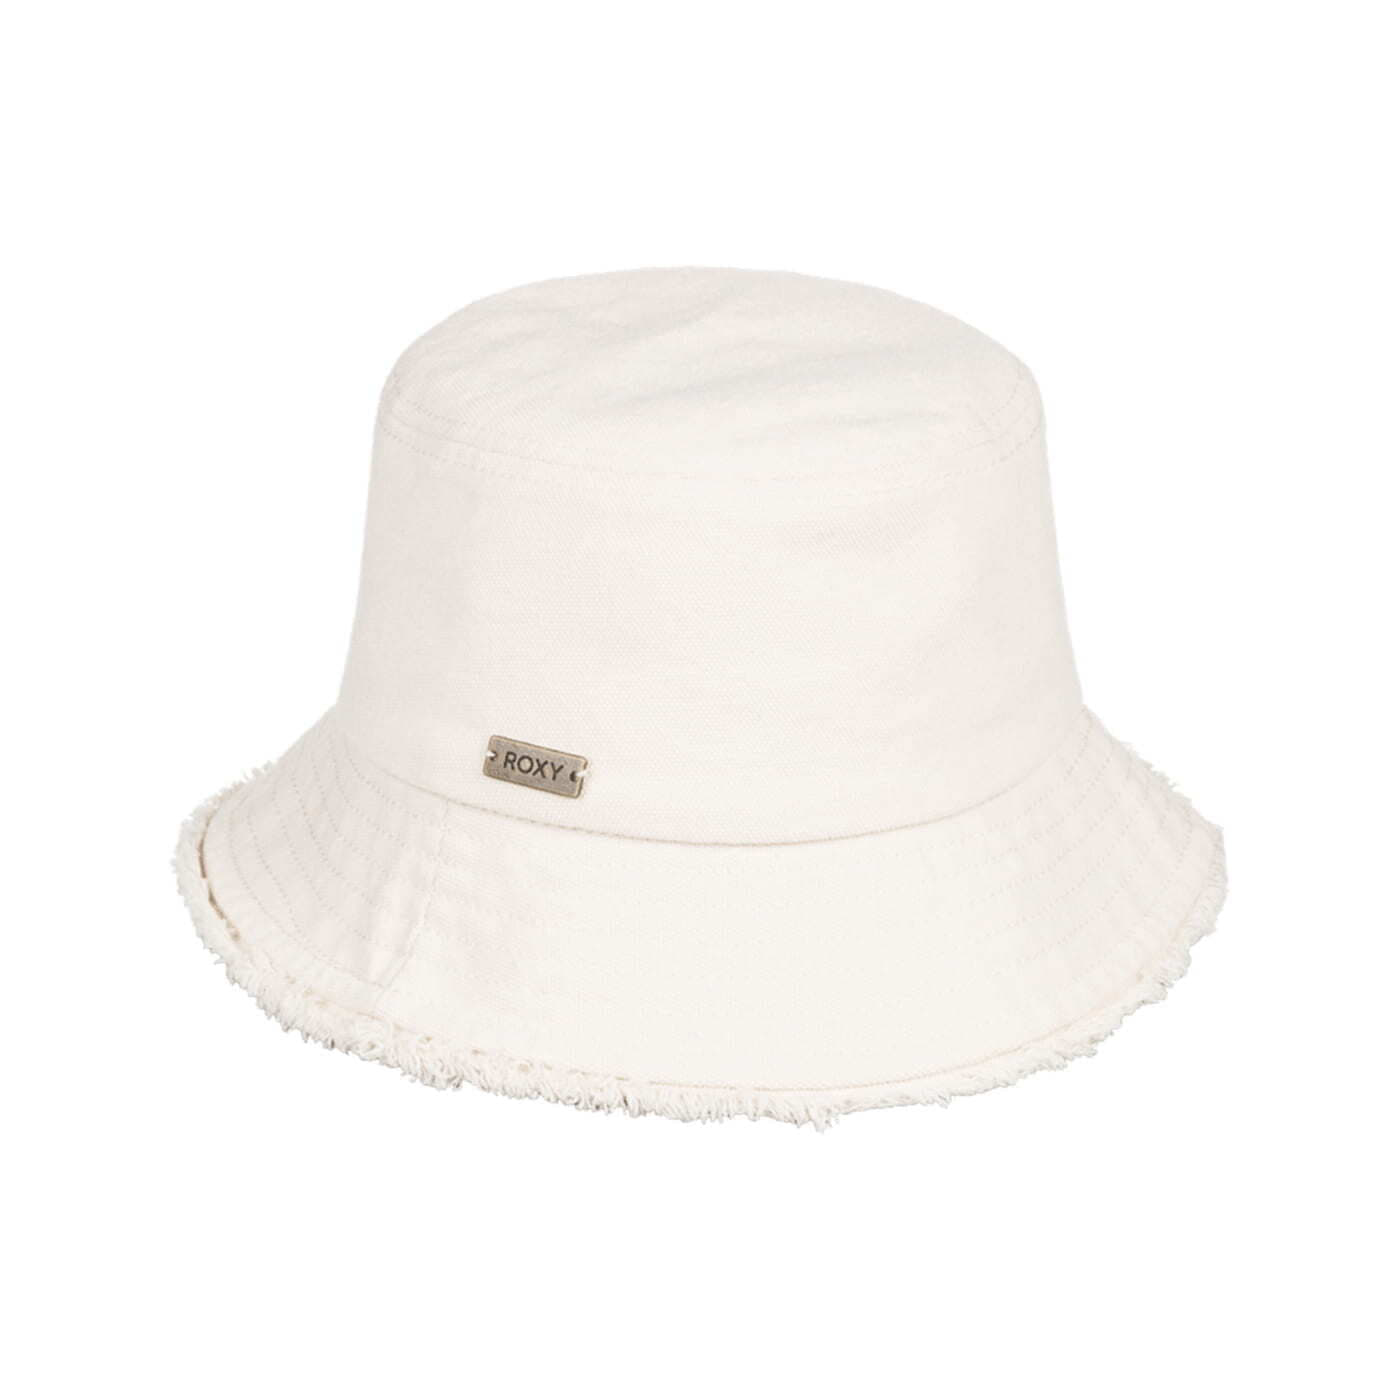 Pălării Roxy Teho Cream